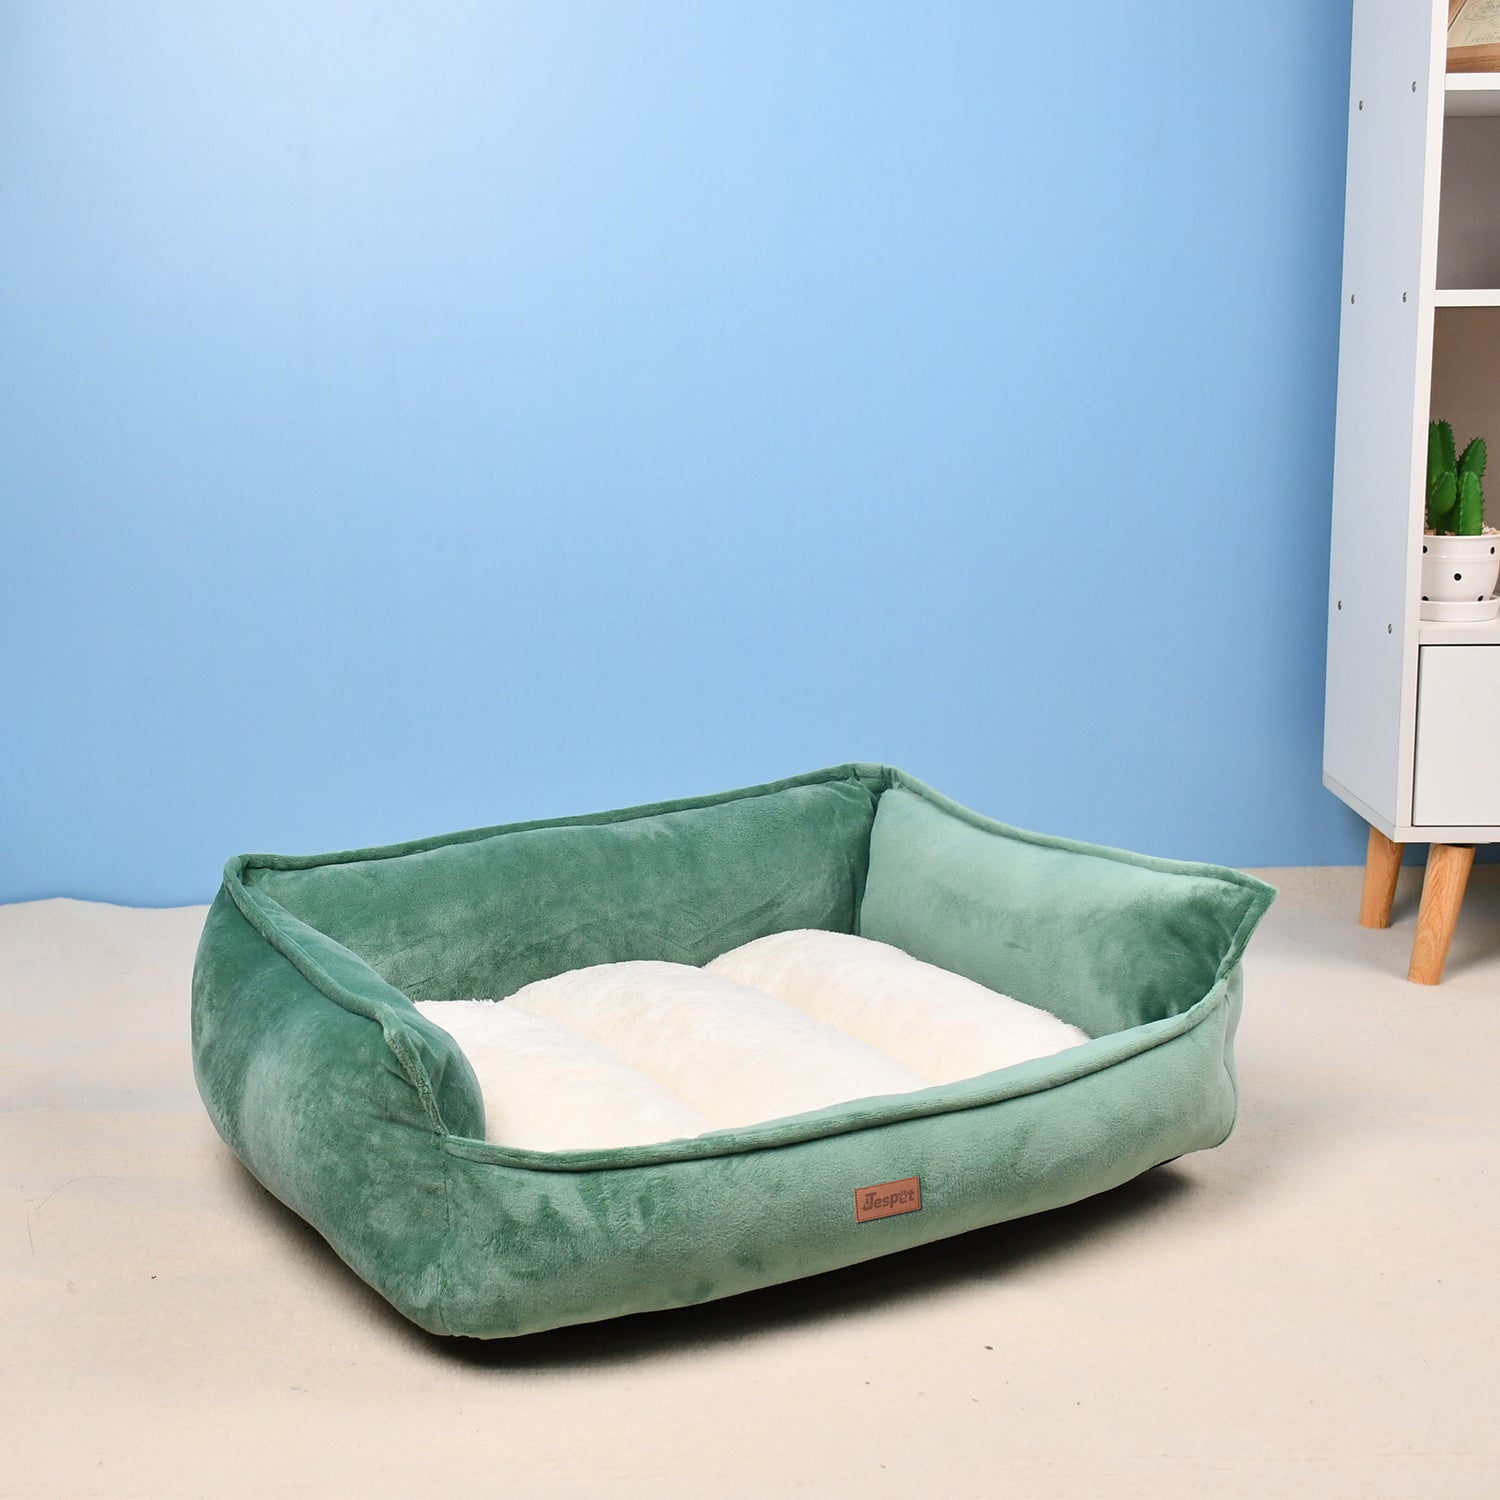 Jespet Warming Comfortable Square Pet Crate Bed, Comfortable Egg-Crate Foam Sofa, Green